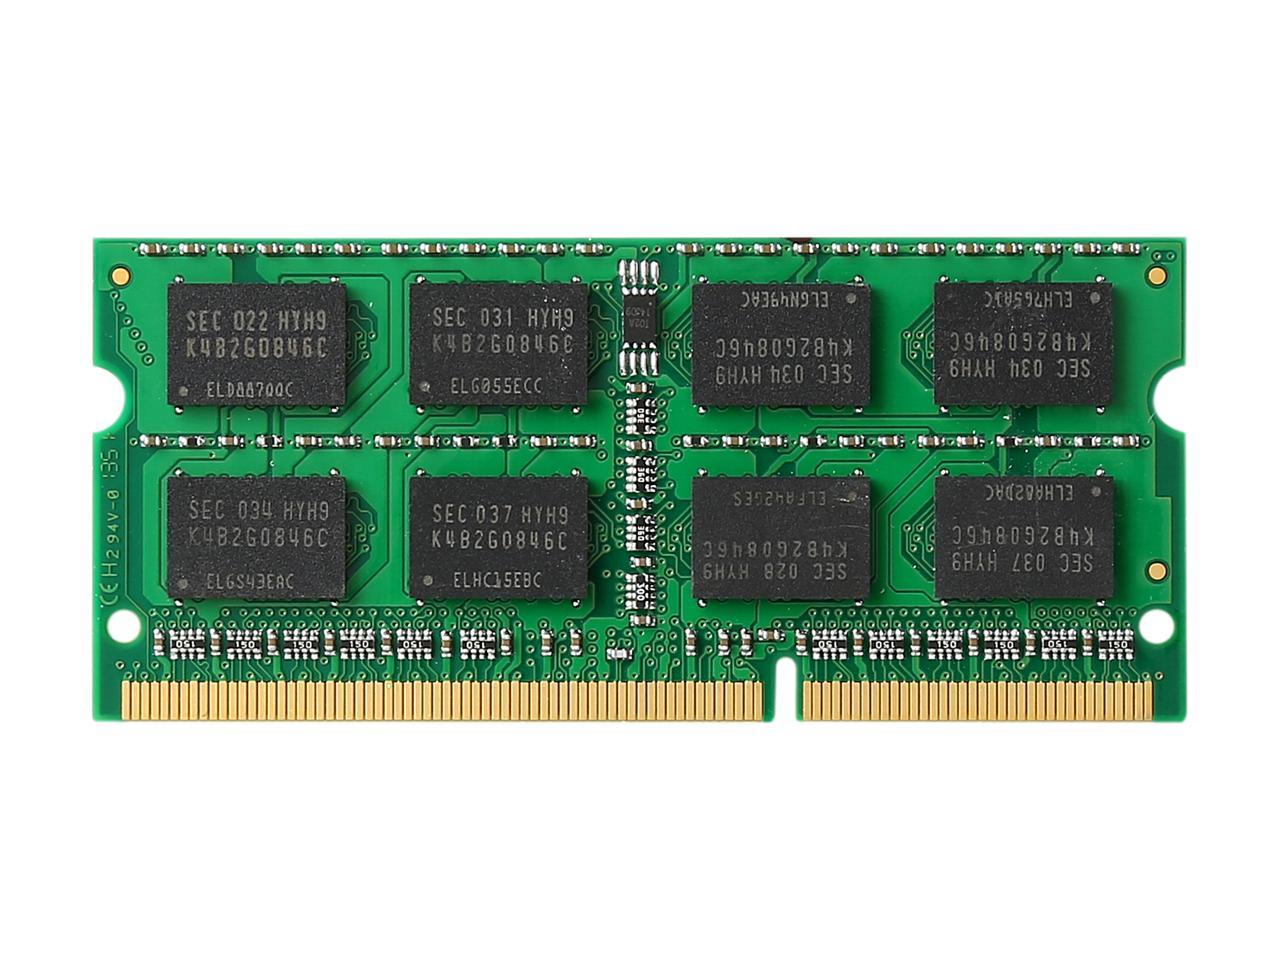 Mushkin Enhanced 4GB 204-Pin DDR3 SO-DIMM DDR3 1333 (PC3 10666) Laptop Memory Model 991647